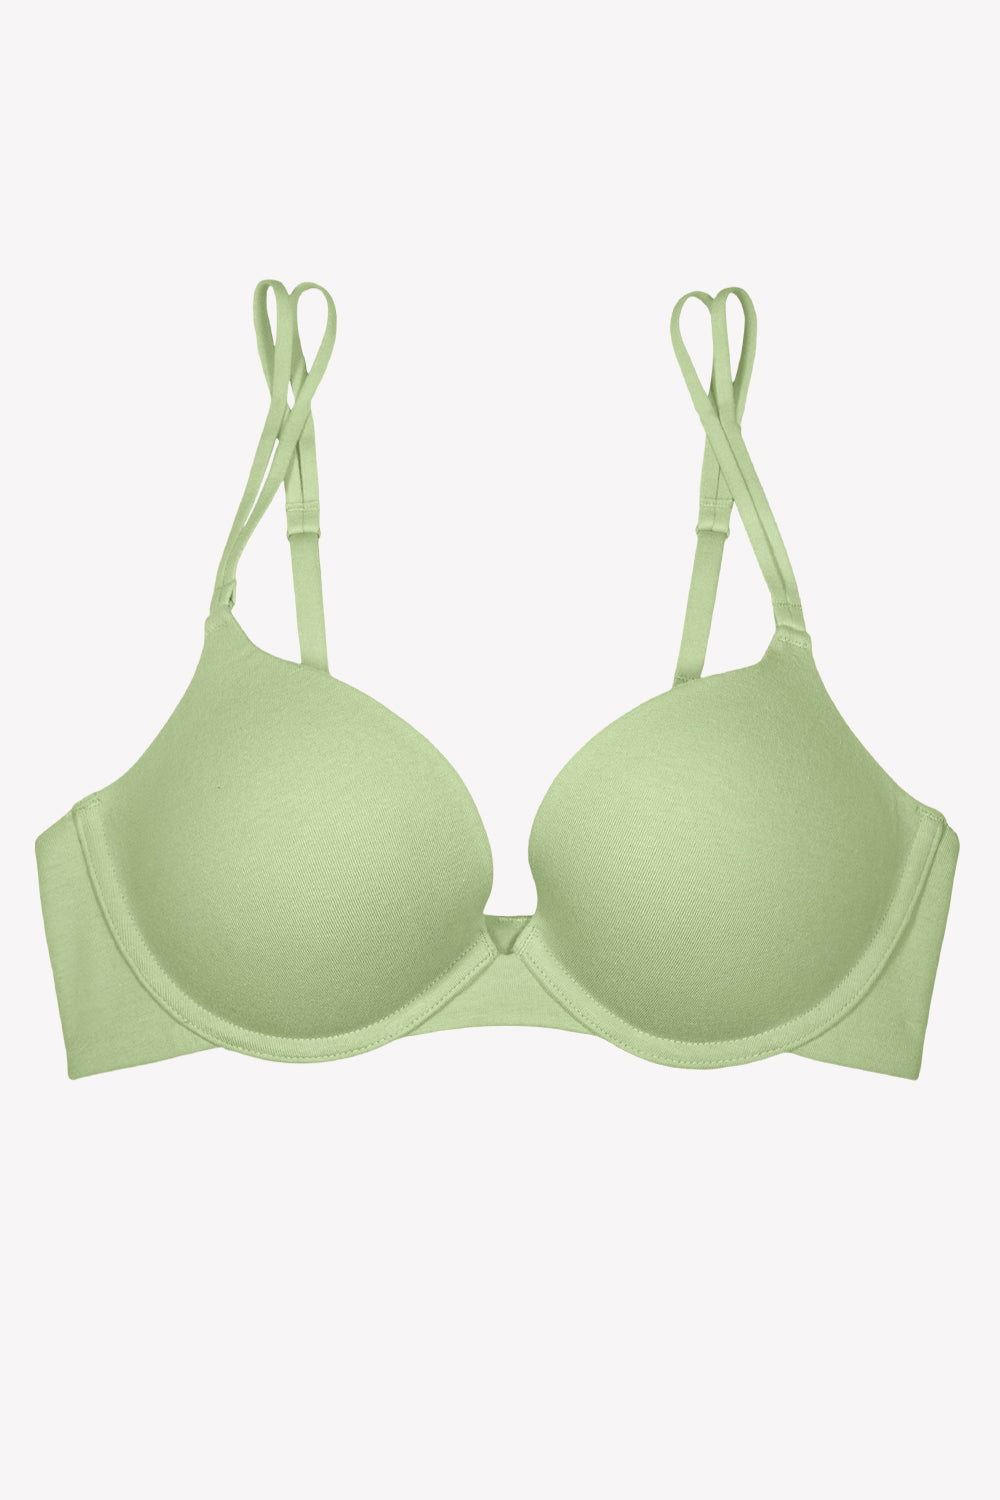 Mint Green Bra  Green bras, Bra brands, Push up bra